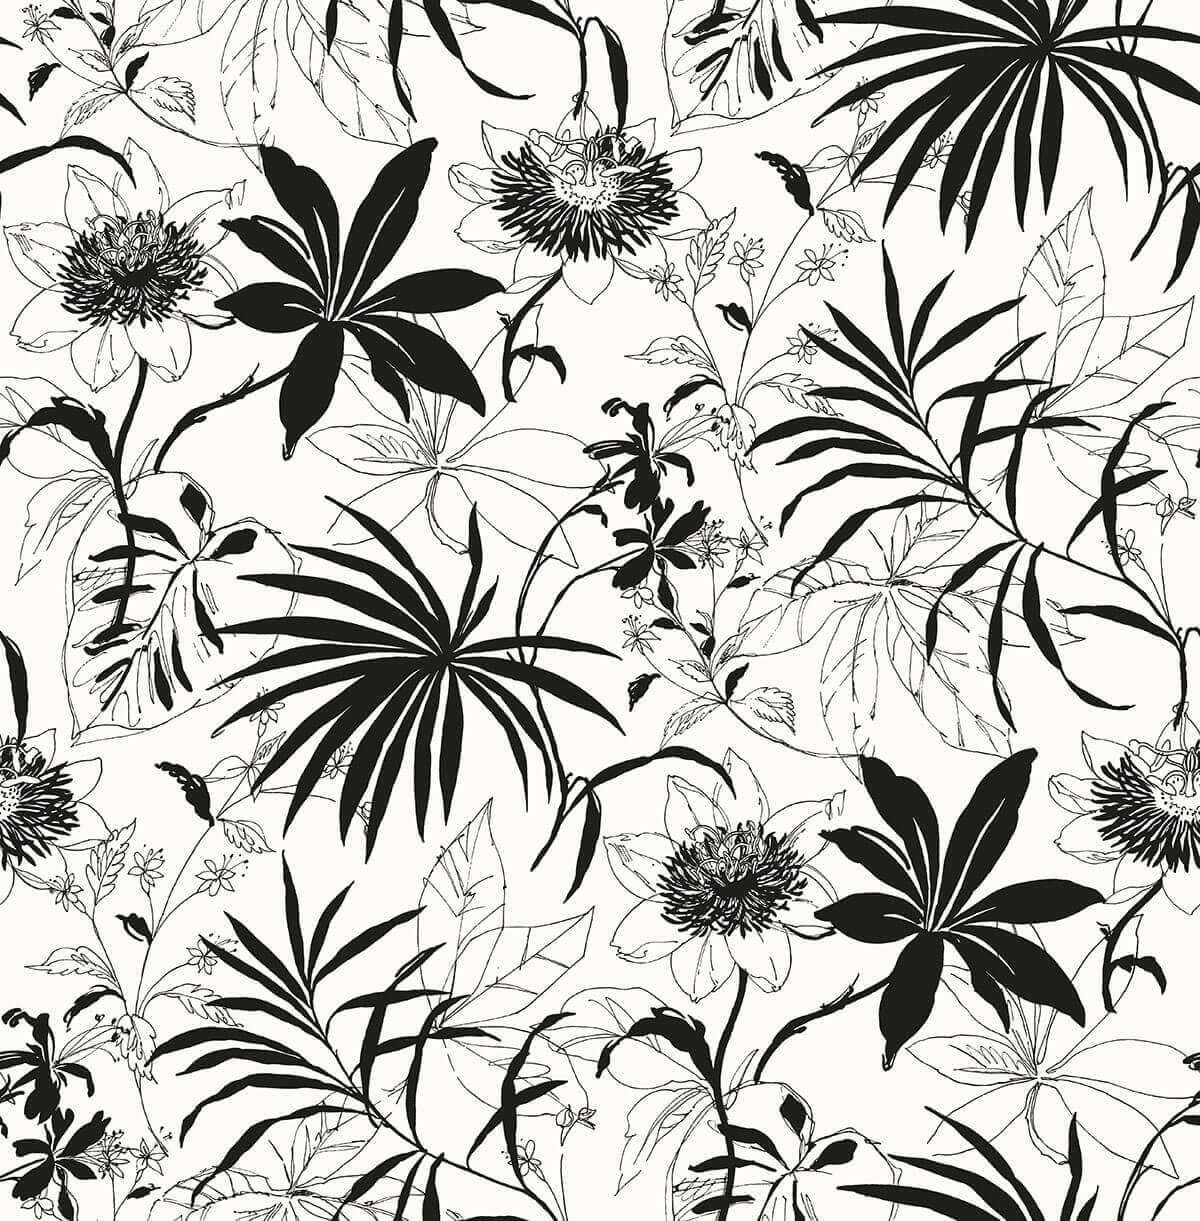 NextWall Tropical Garden Peel & Stick Wallpaper - Black & White